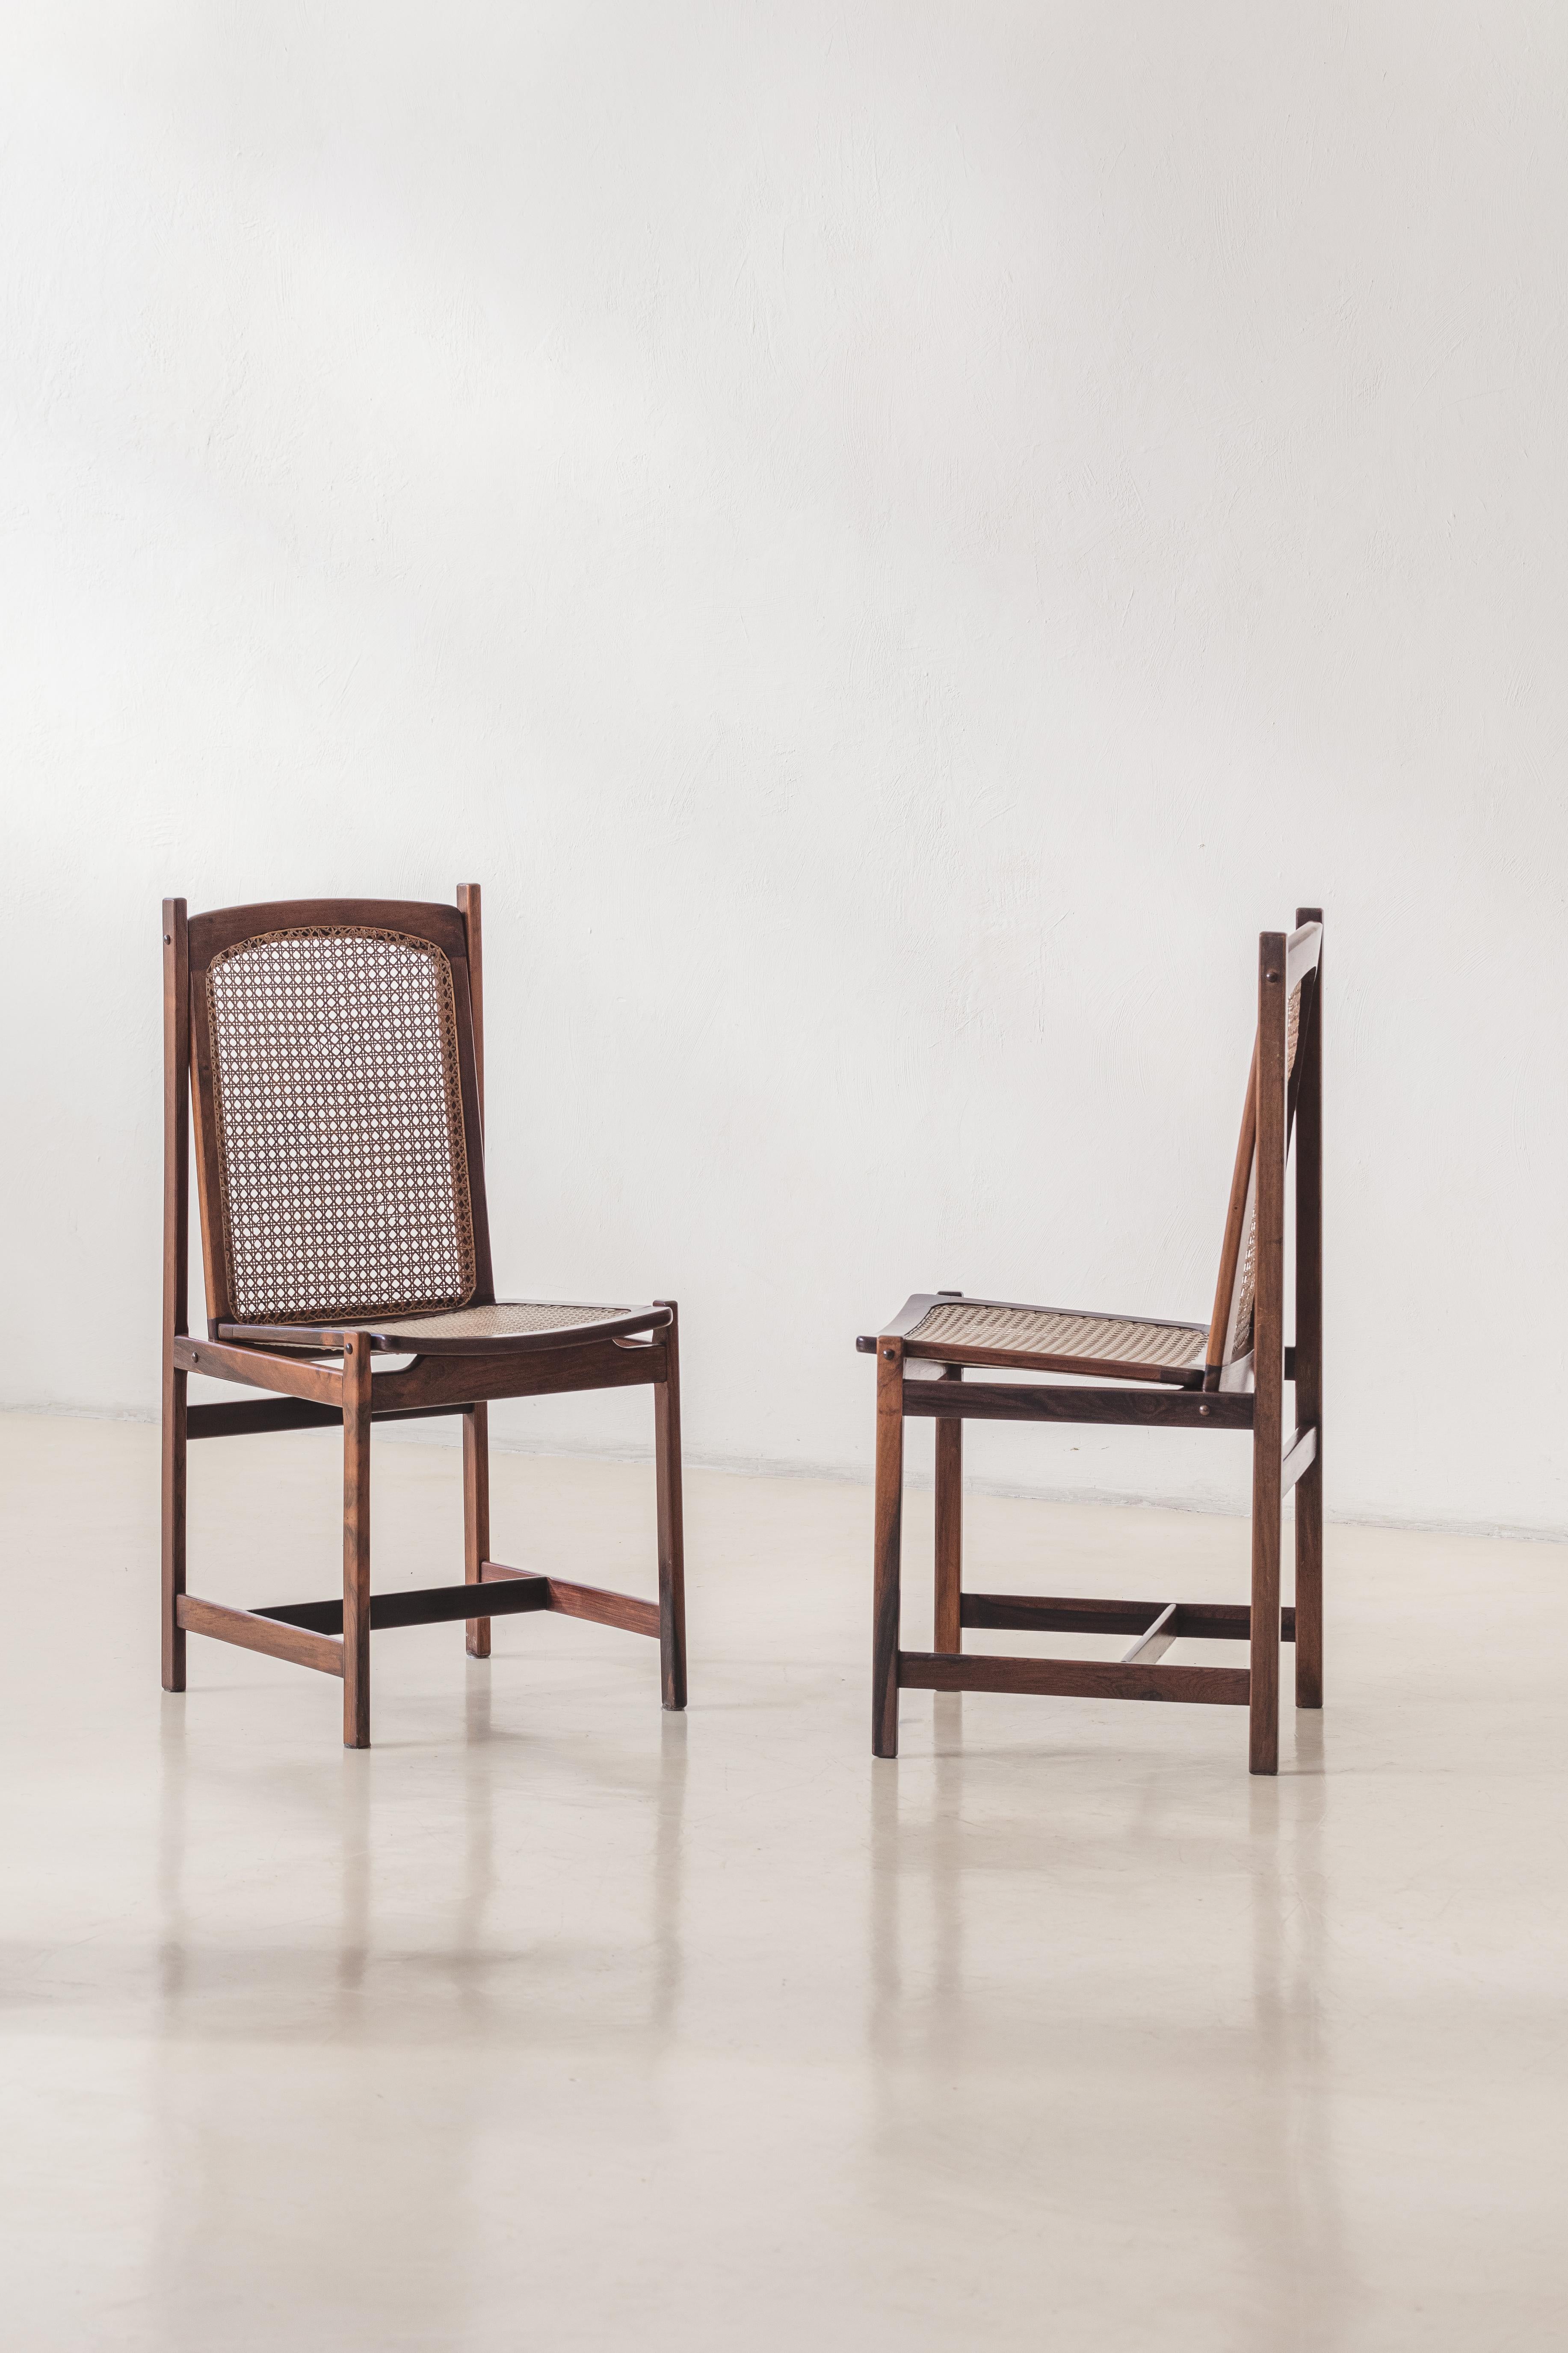 Bois Celina Decorações set of six Dining Chairs, Rosewood and Cane, Mid-Century 1960s en vente